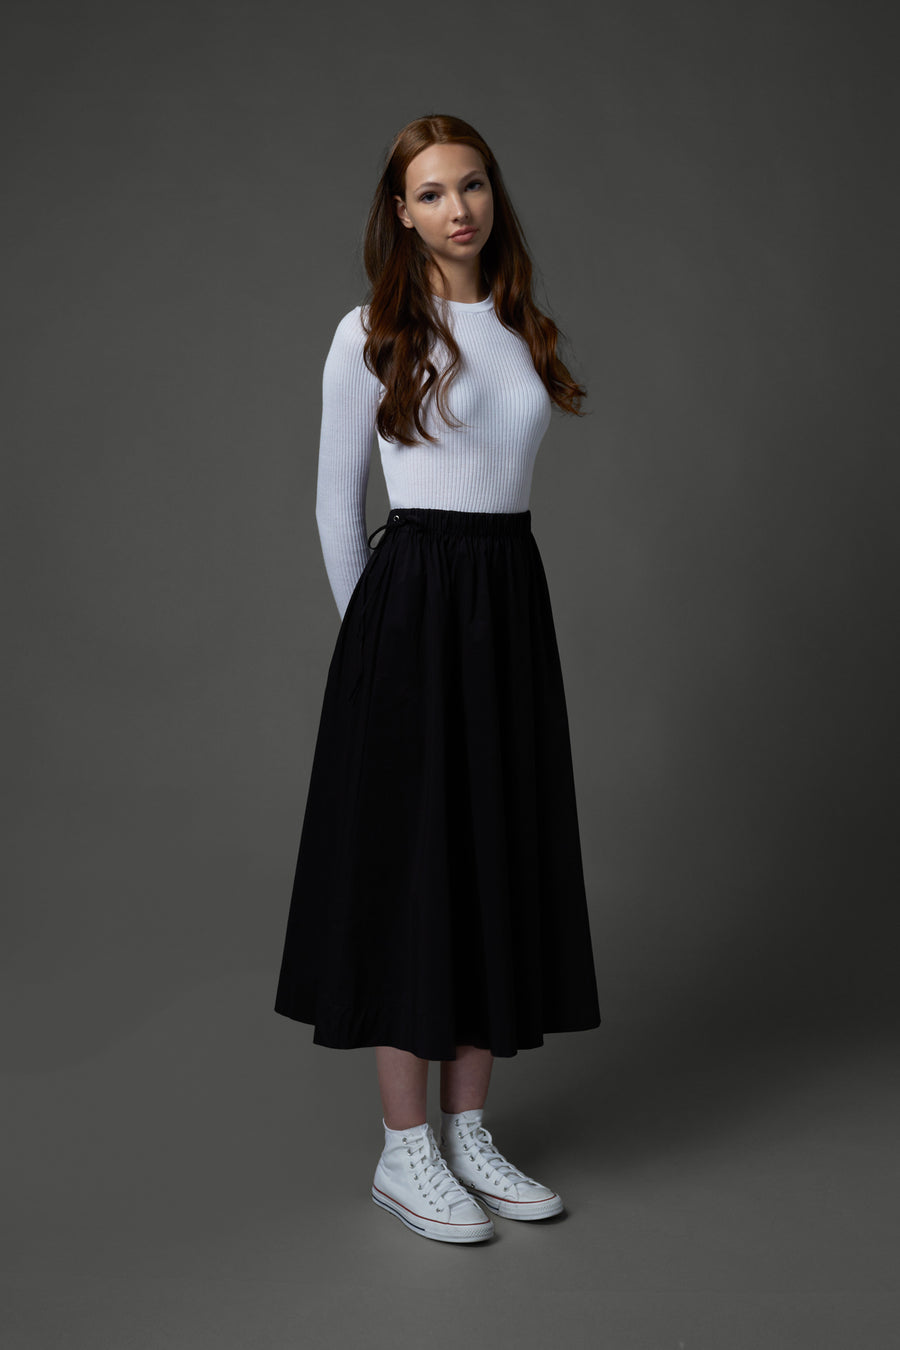 Leslie black skirt by Zaikamoya